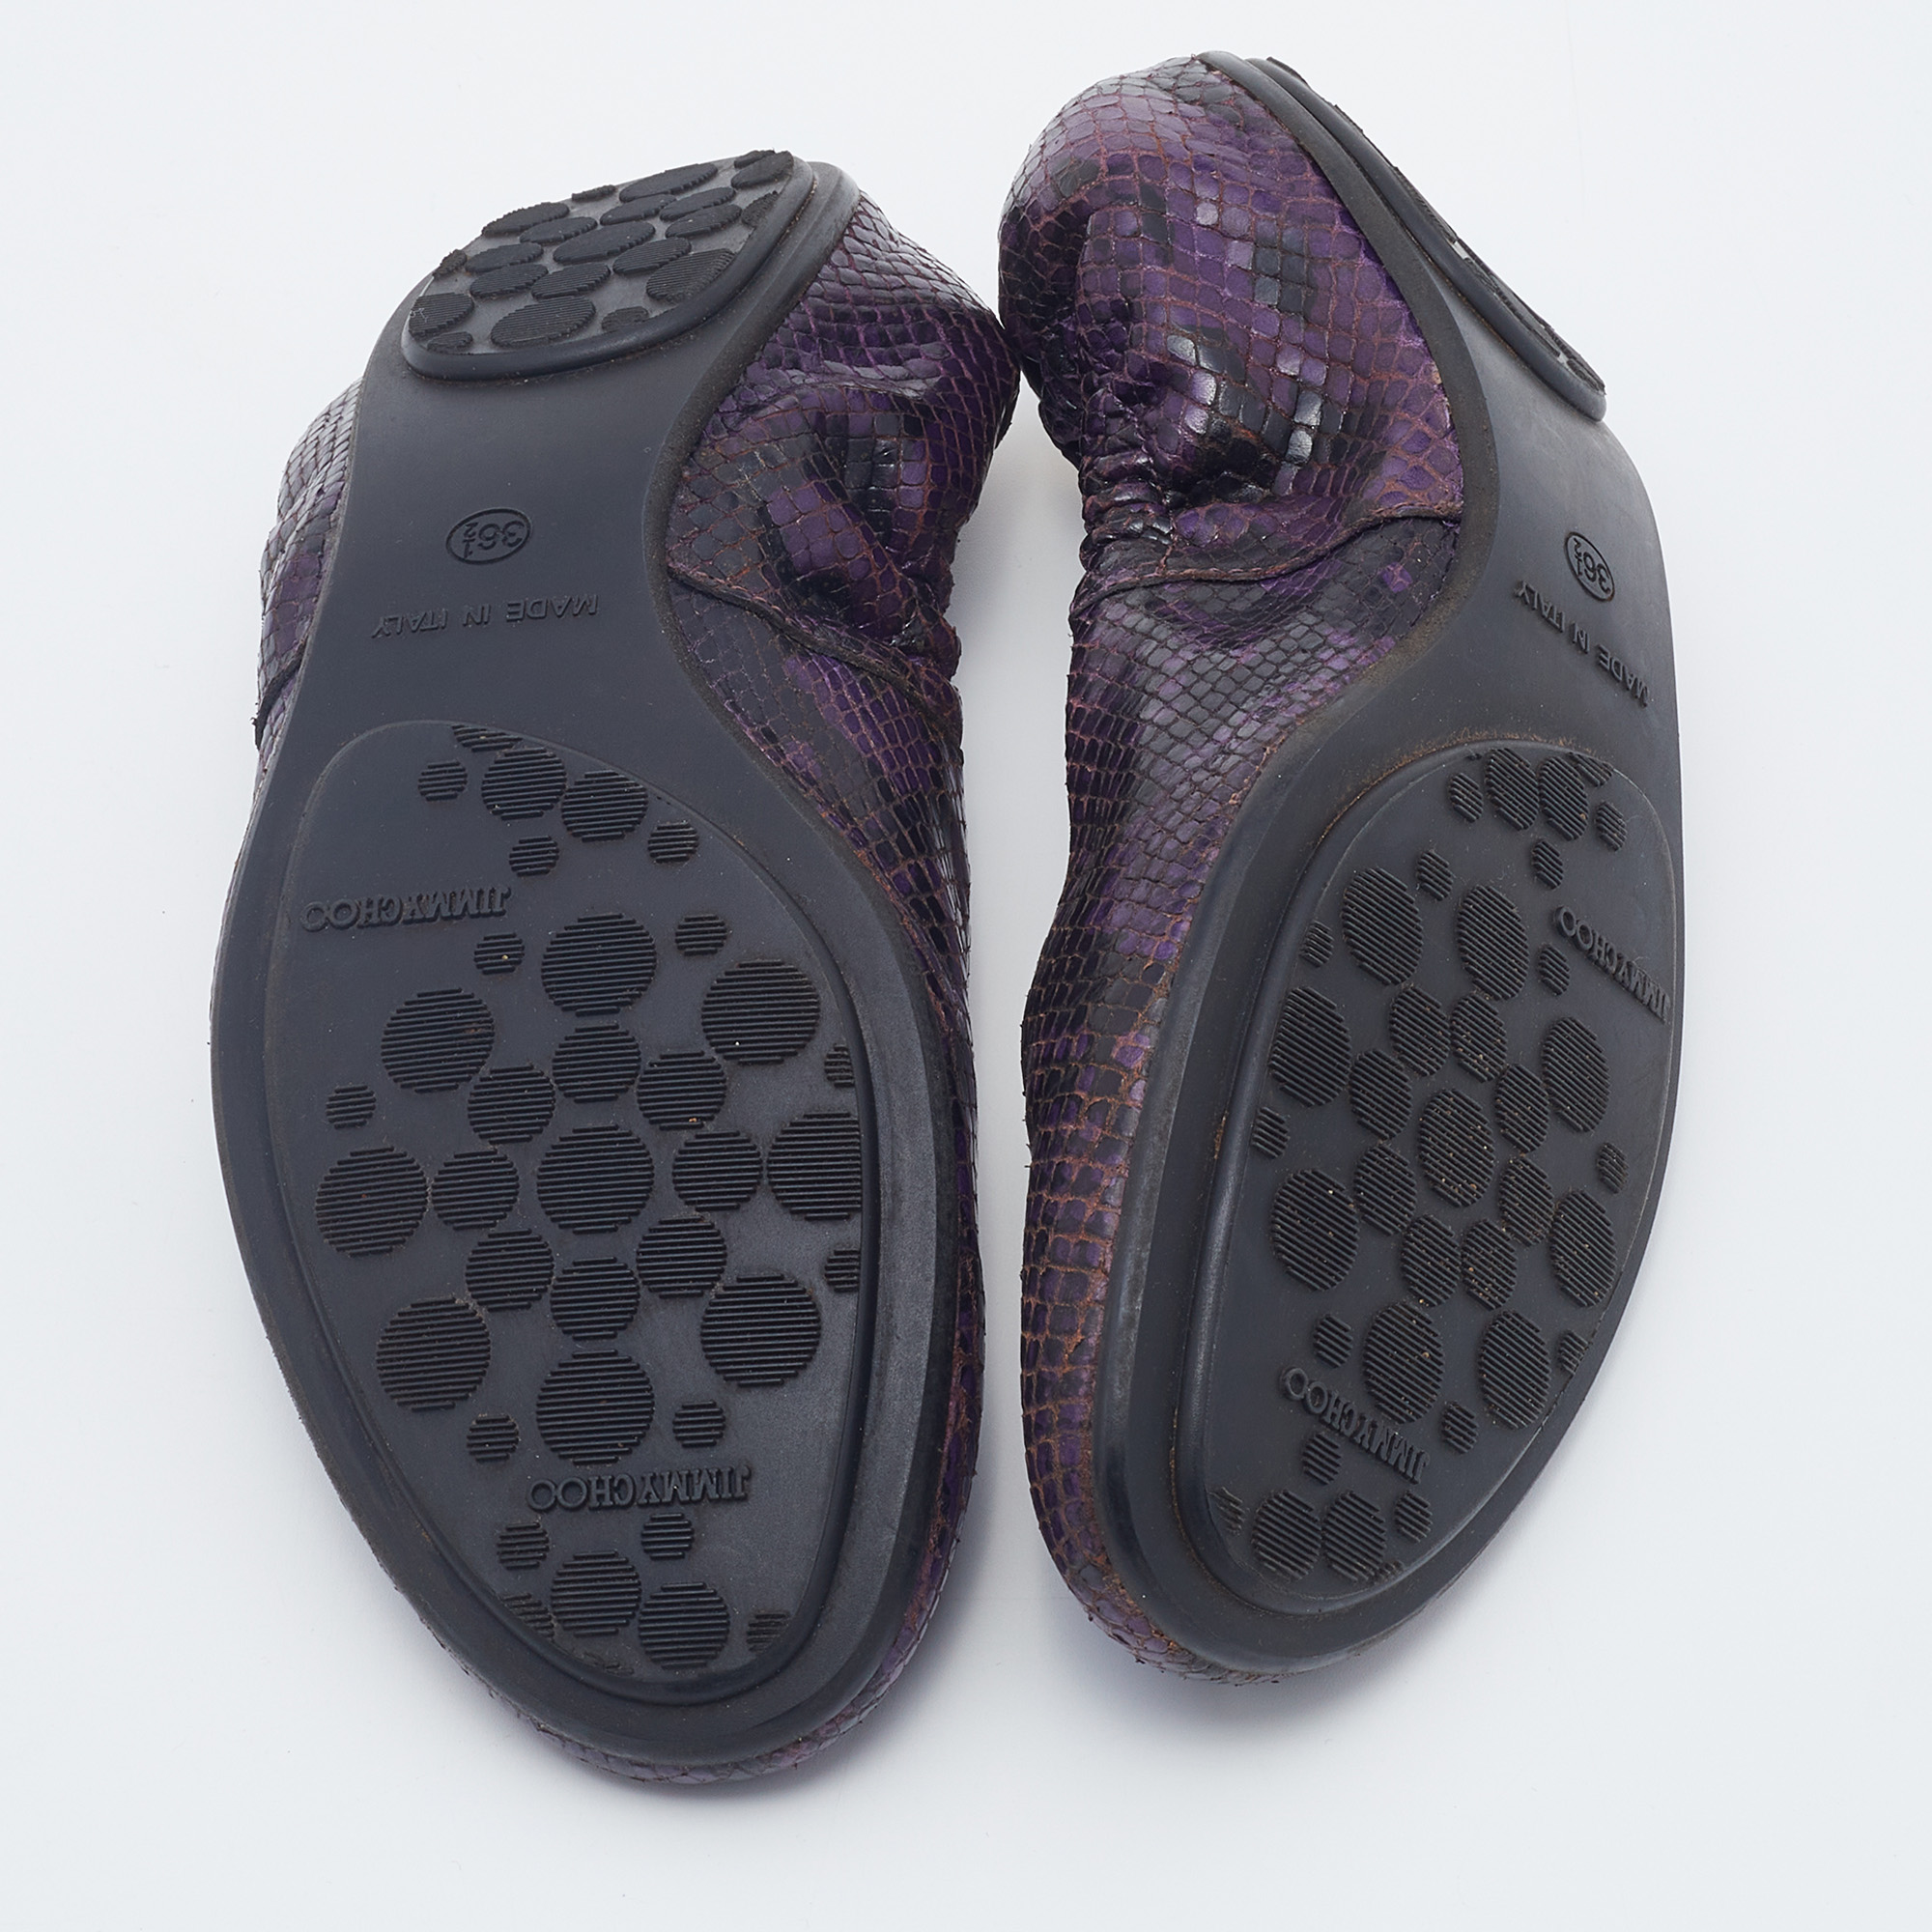 Jimmy Choo Purple/Black Python Embossed Leather Scrunch Ballet Flats Size 36.5